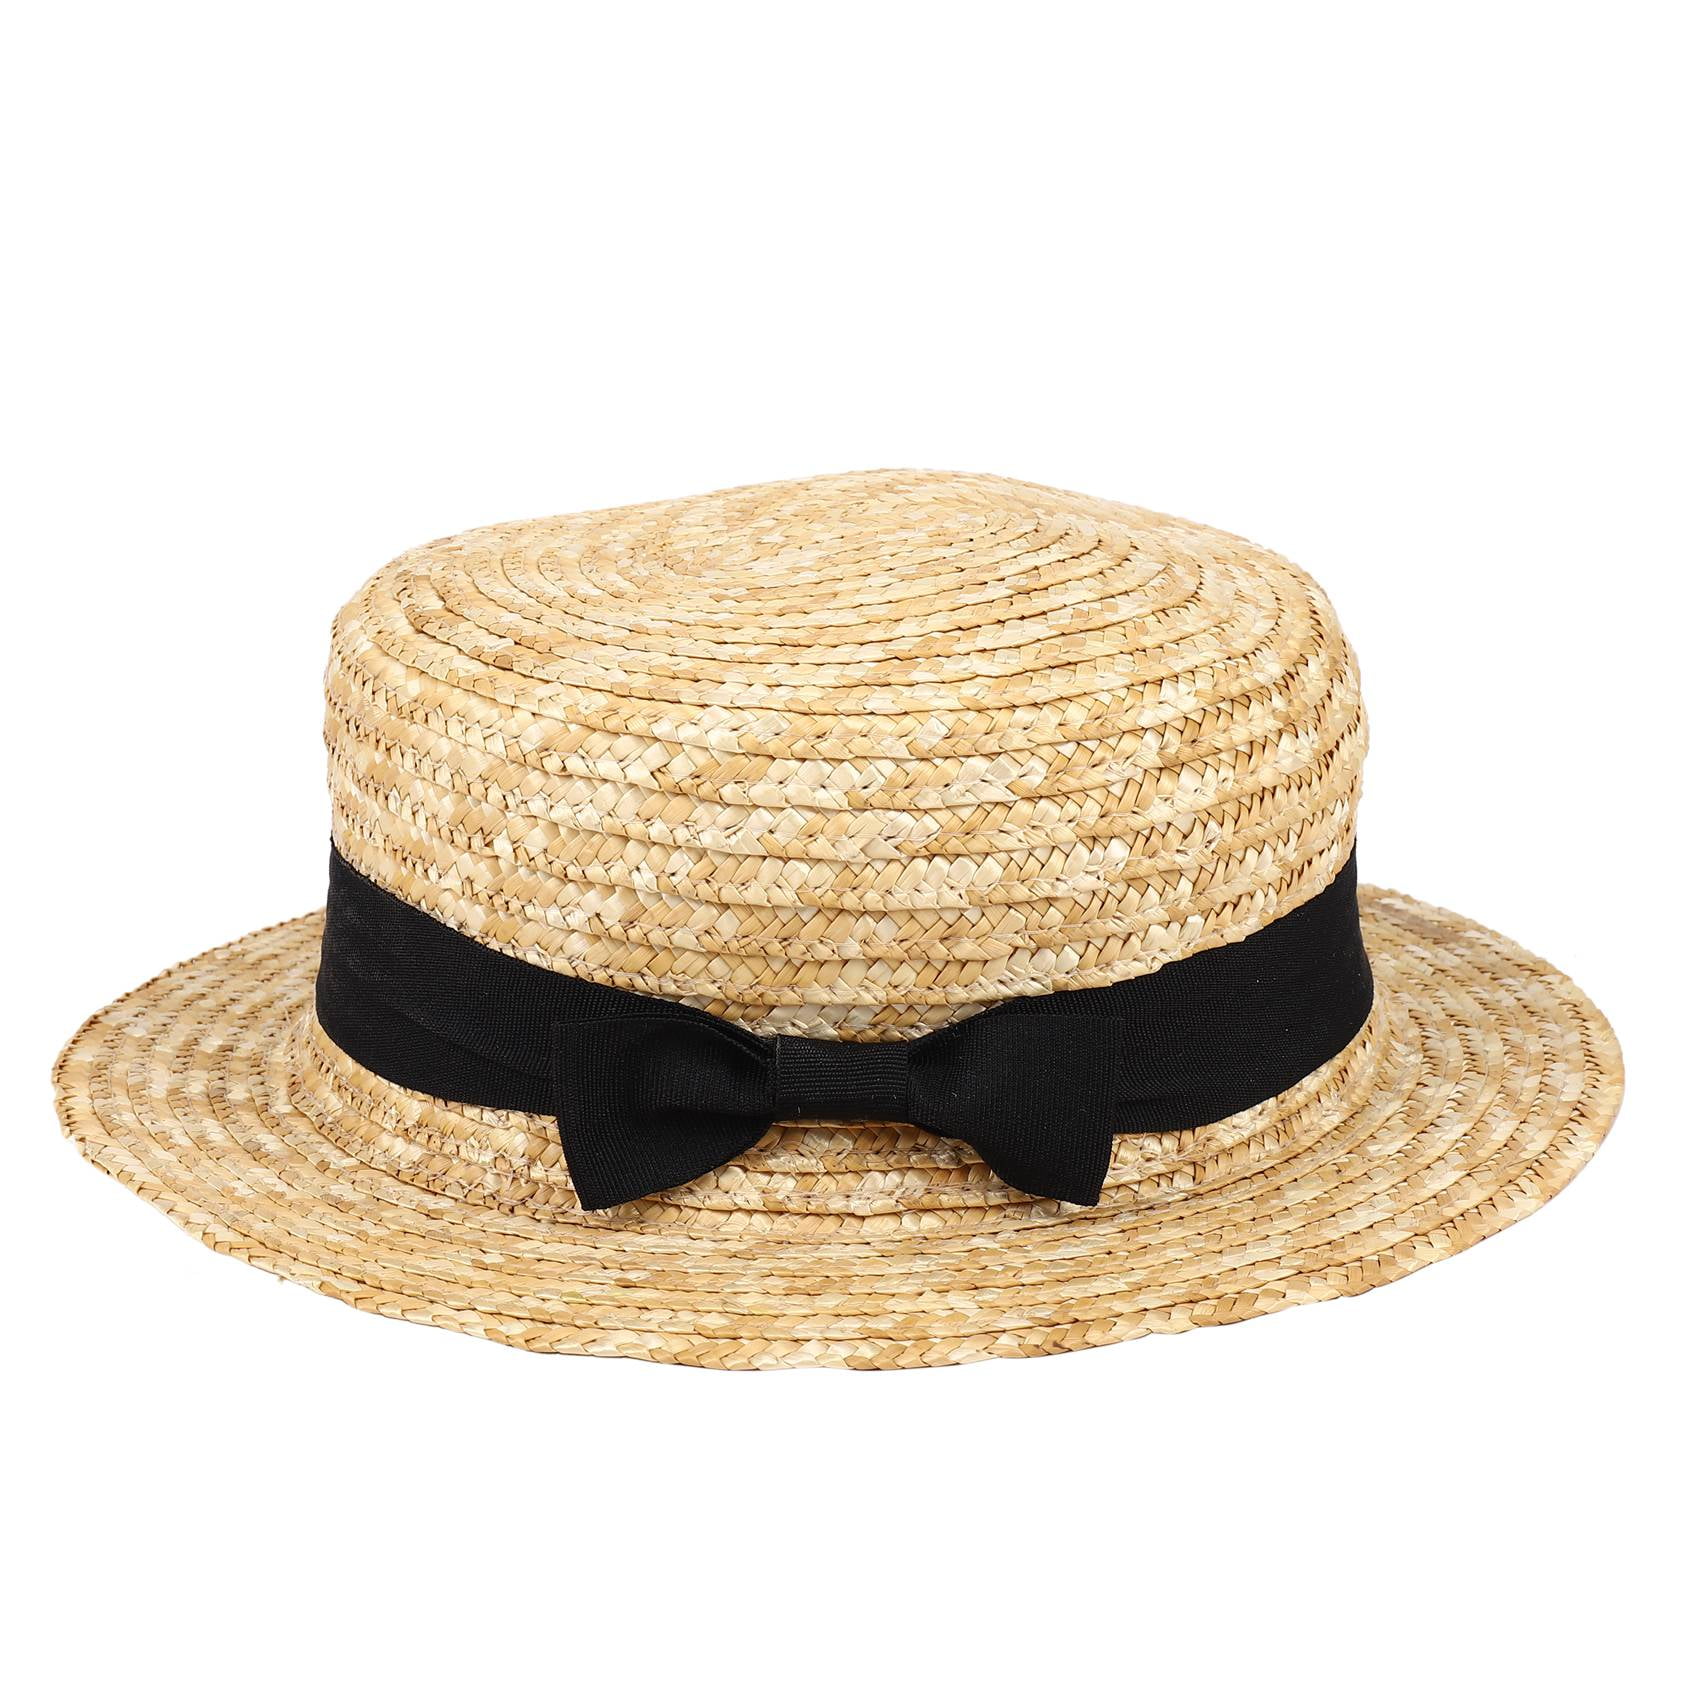 Summer Fashion Cute Unisex Kids Bowknot Straw Sunhat Beach Flat Top Fedora Hats 